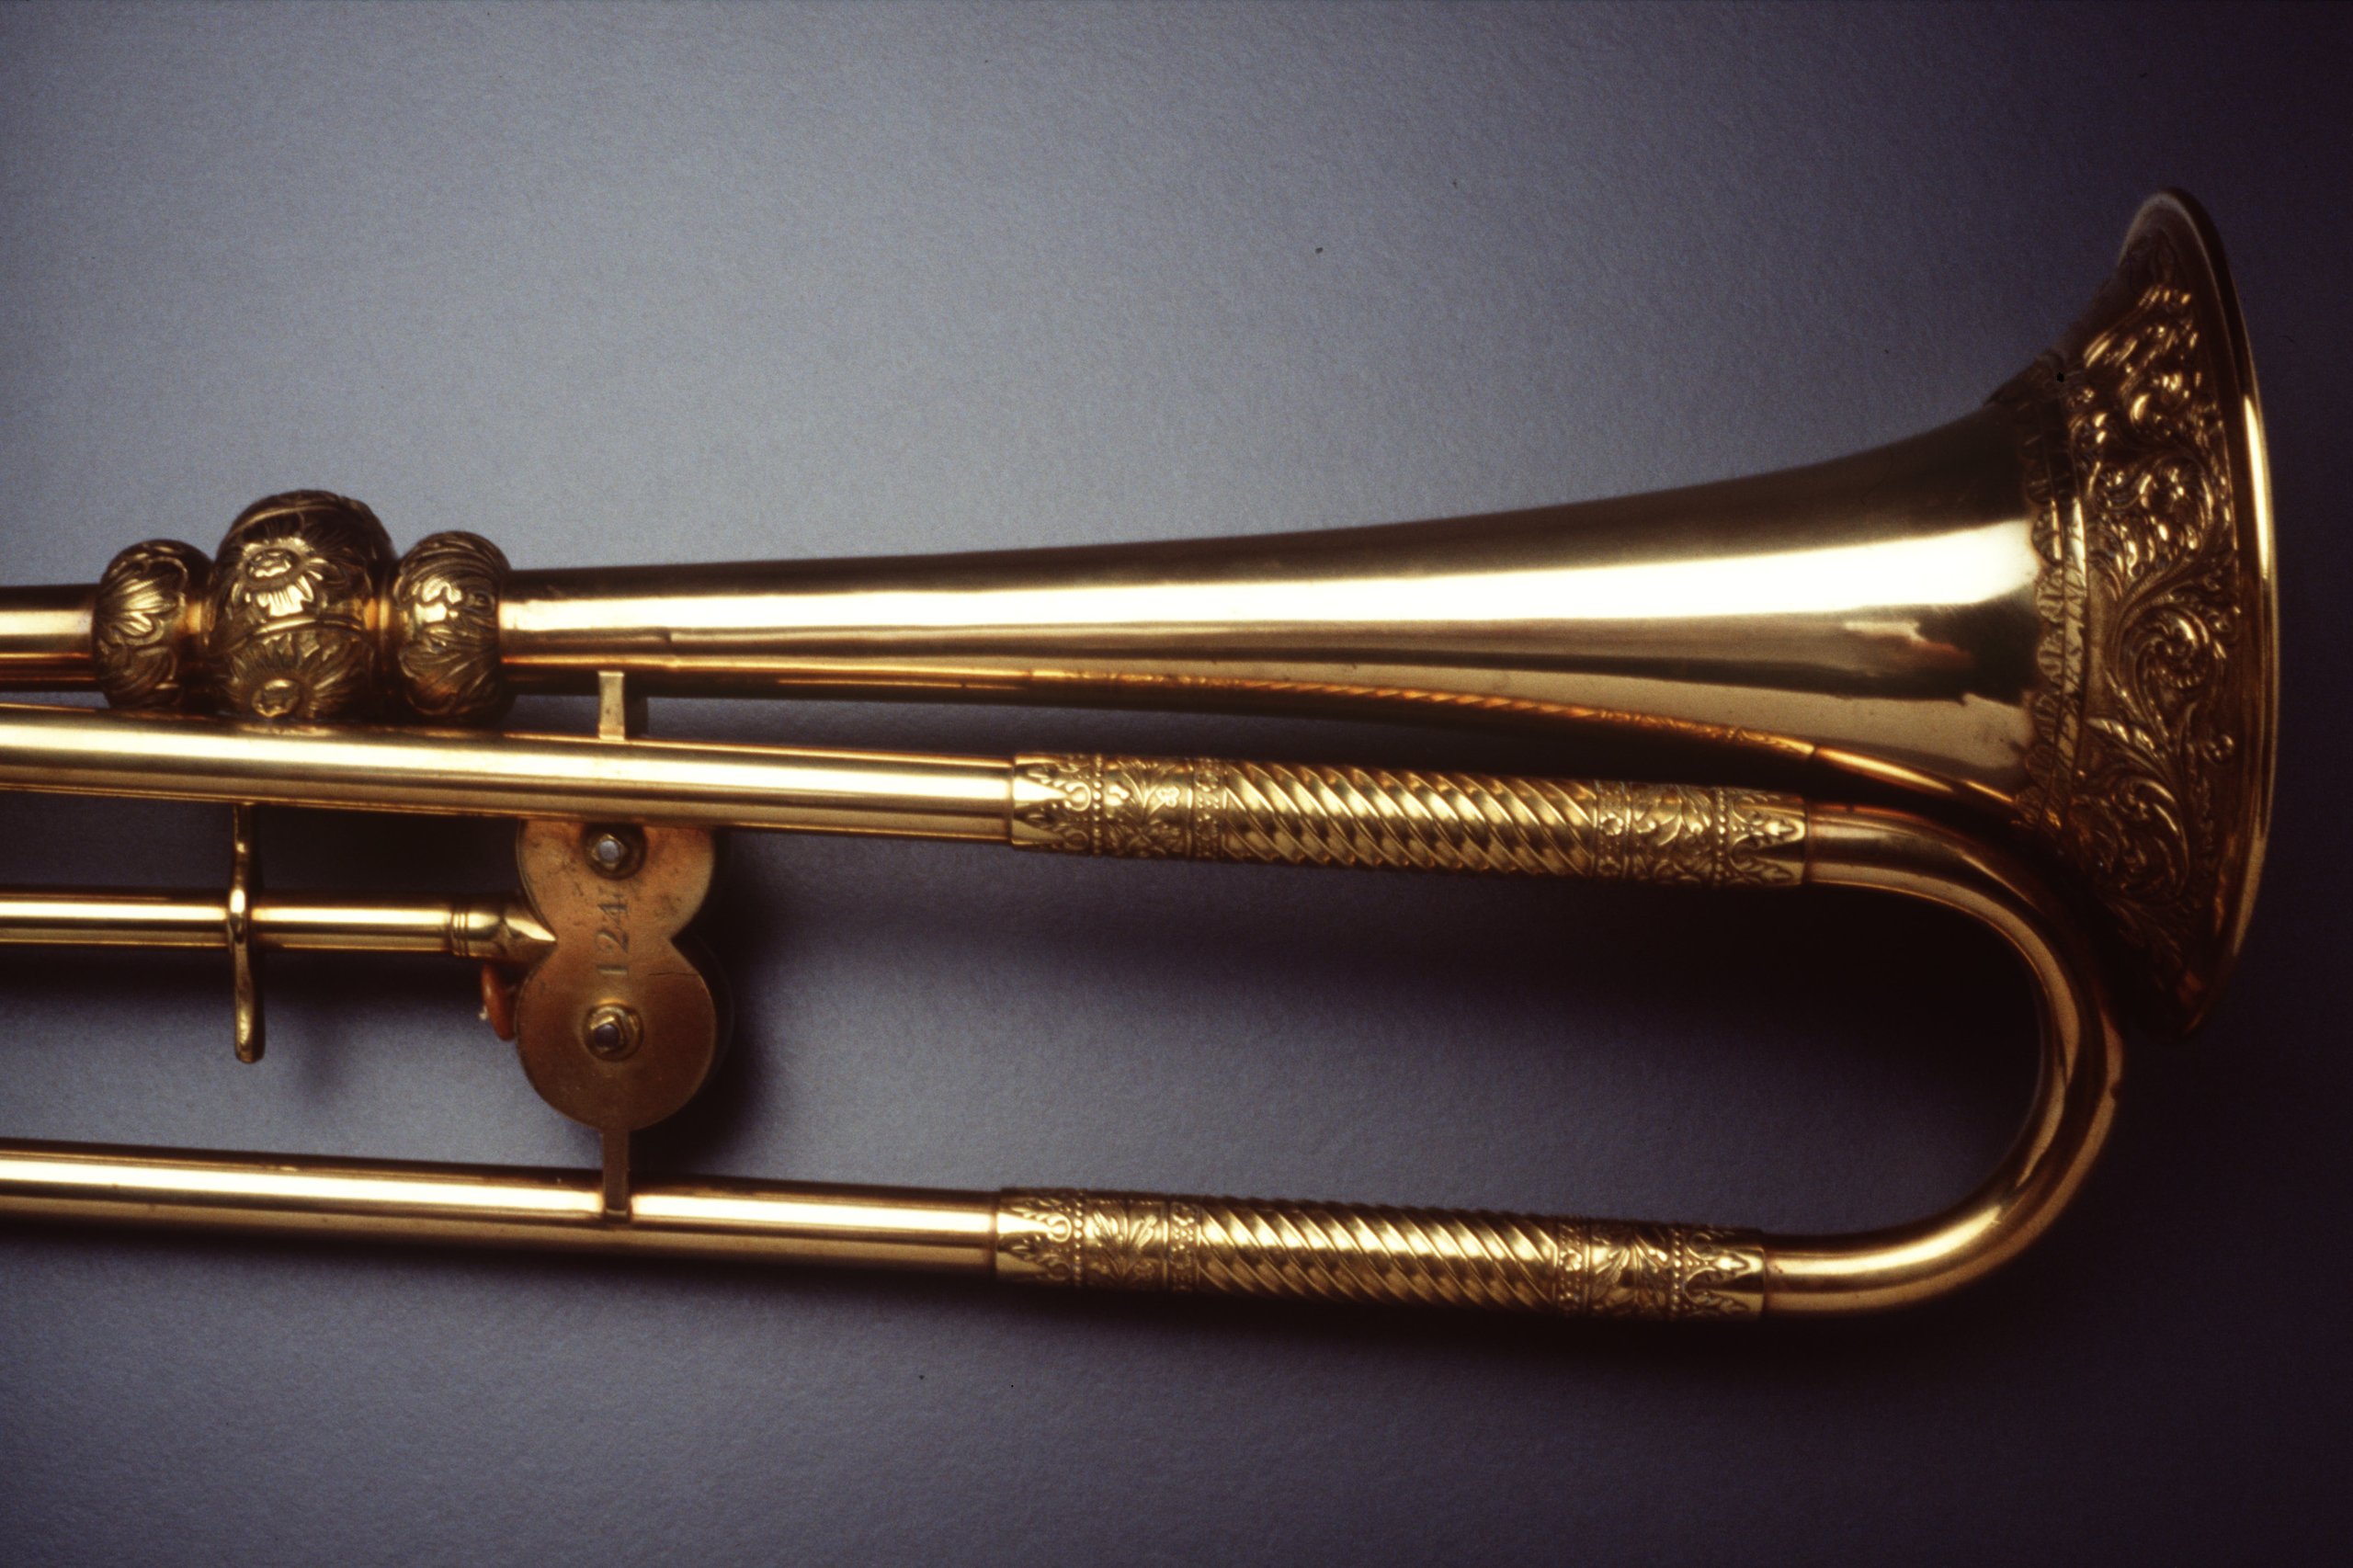 Oratoria slide trumpet made by John Augustus Kohler